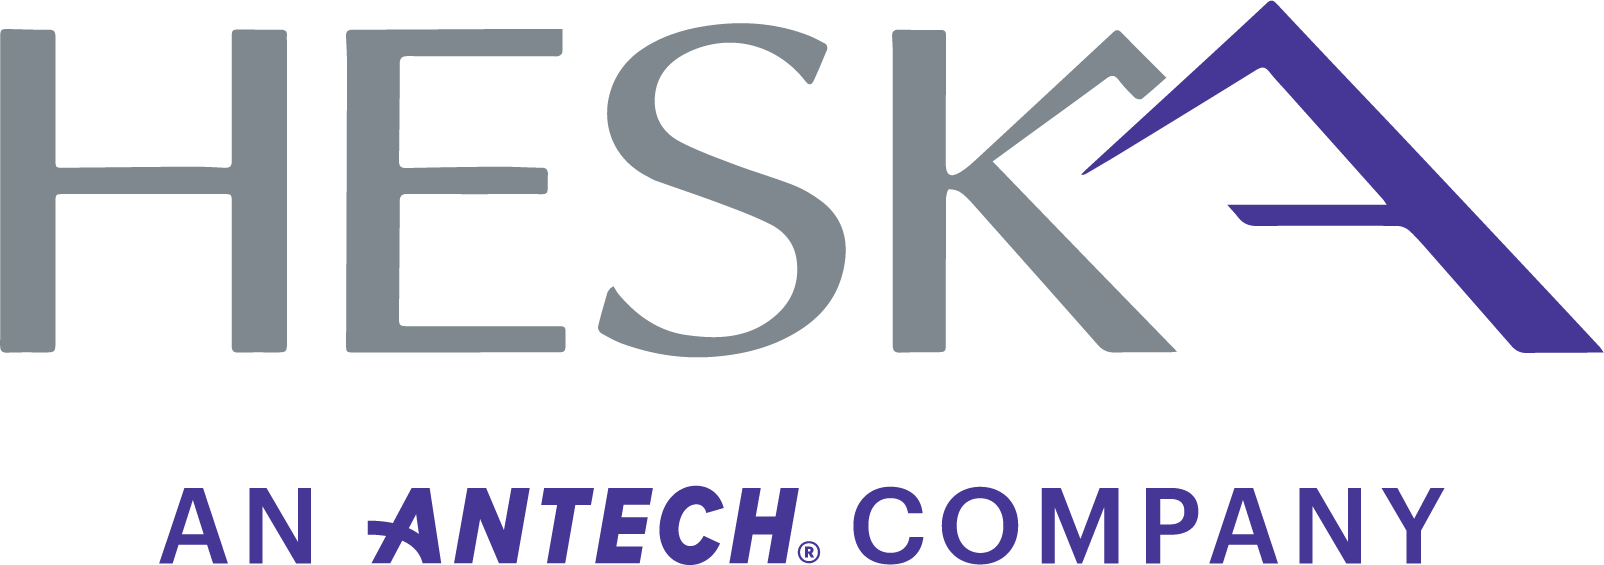 Heska Logo